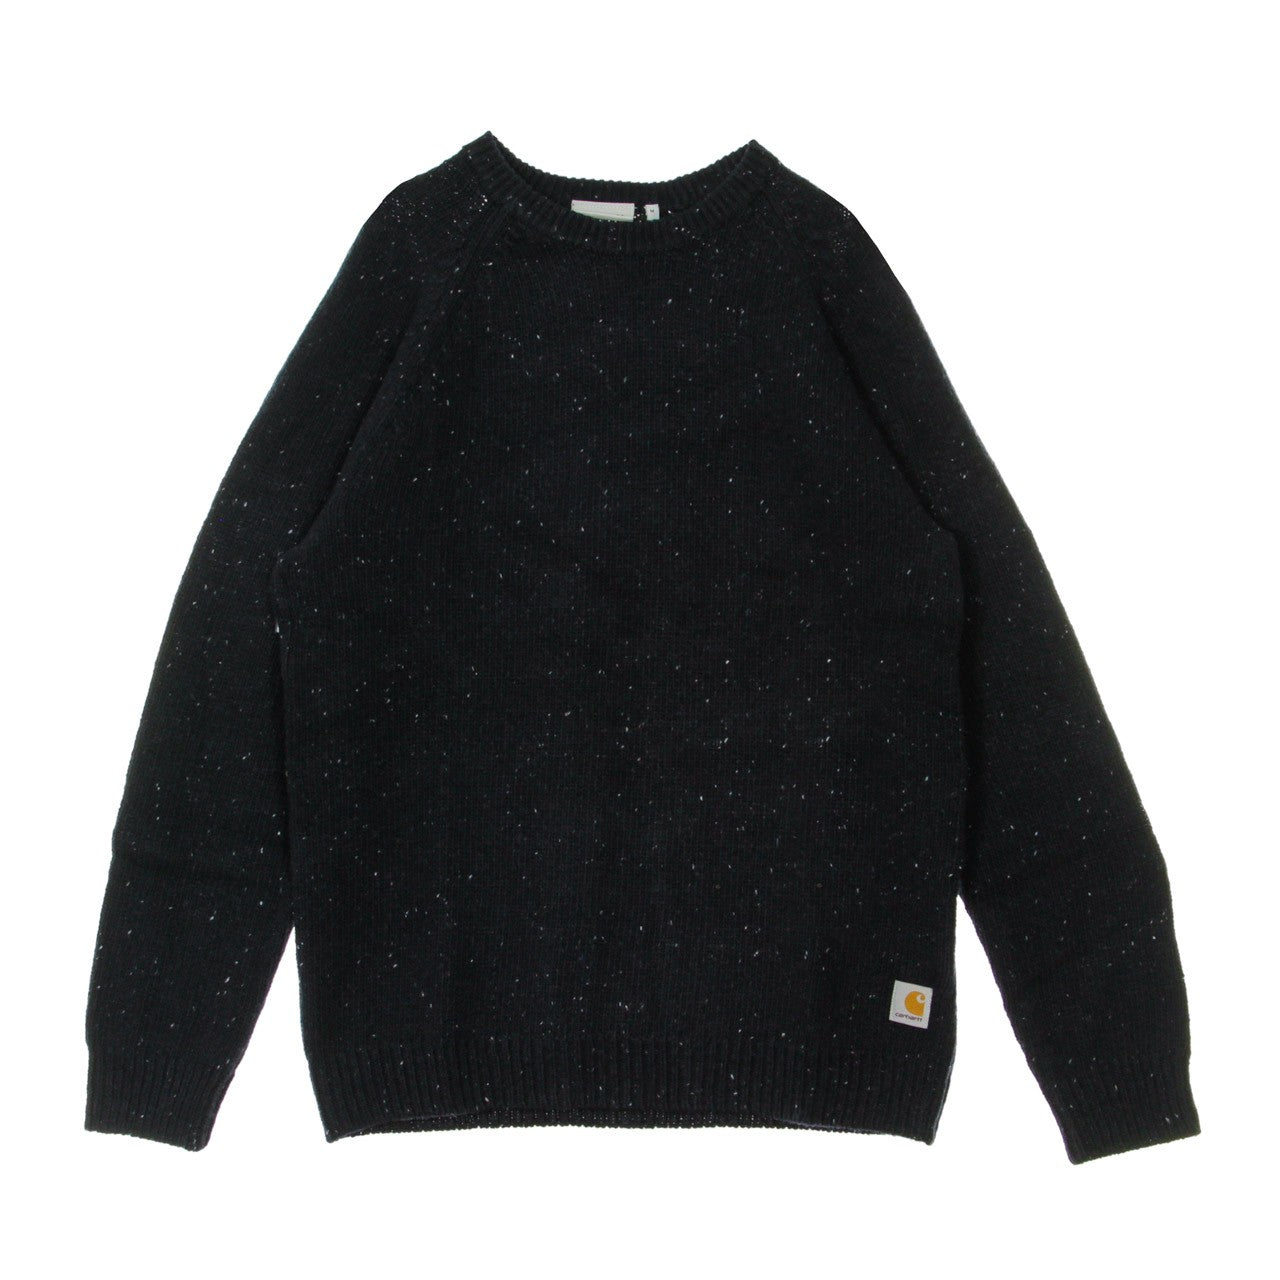 Maglione Uomo Anglistic Sweater Dark Navy Heather I010977